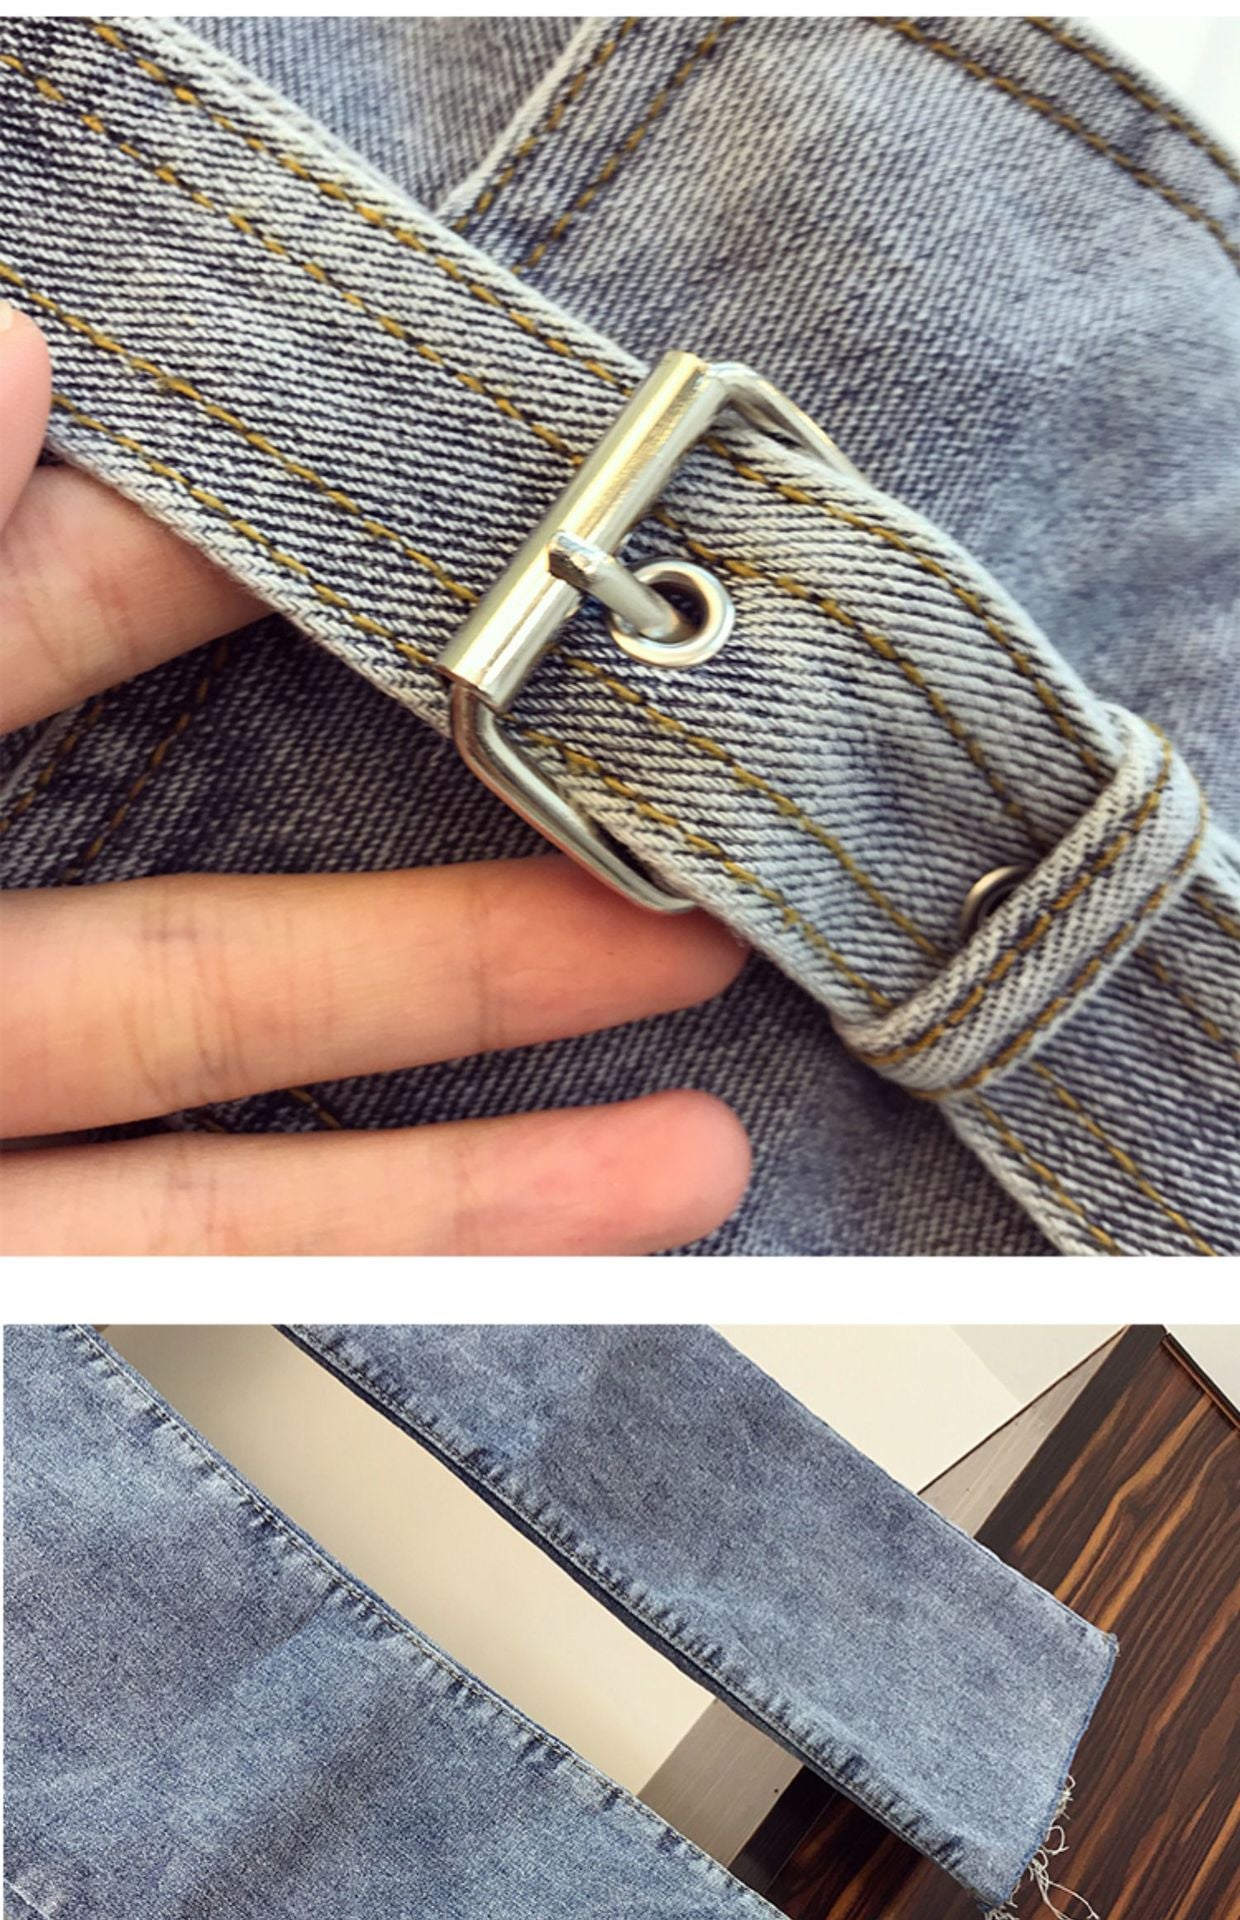 Stacy Shirt + Jeans + Skirt Set